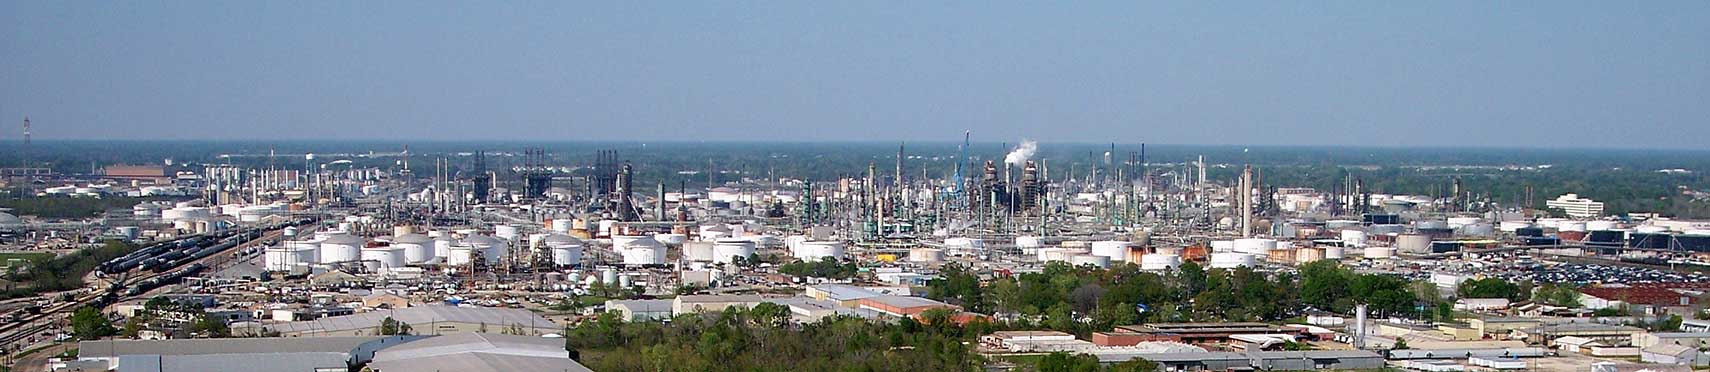 ExxonMobil oil refinery in Baton Rouge, Louisiana, USA